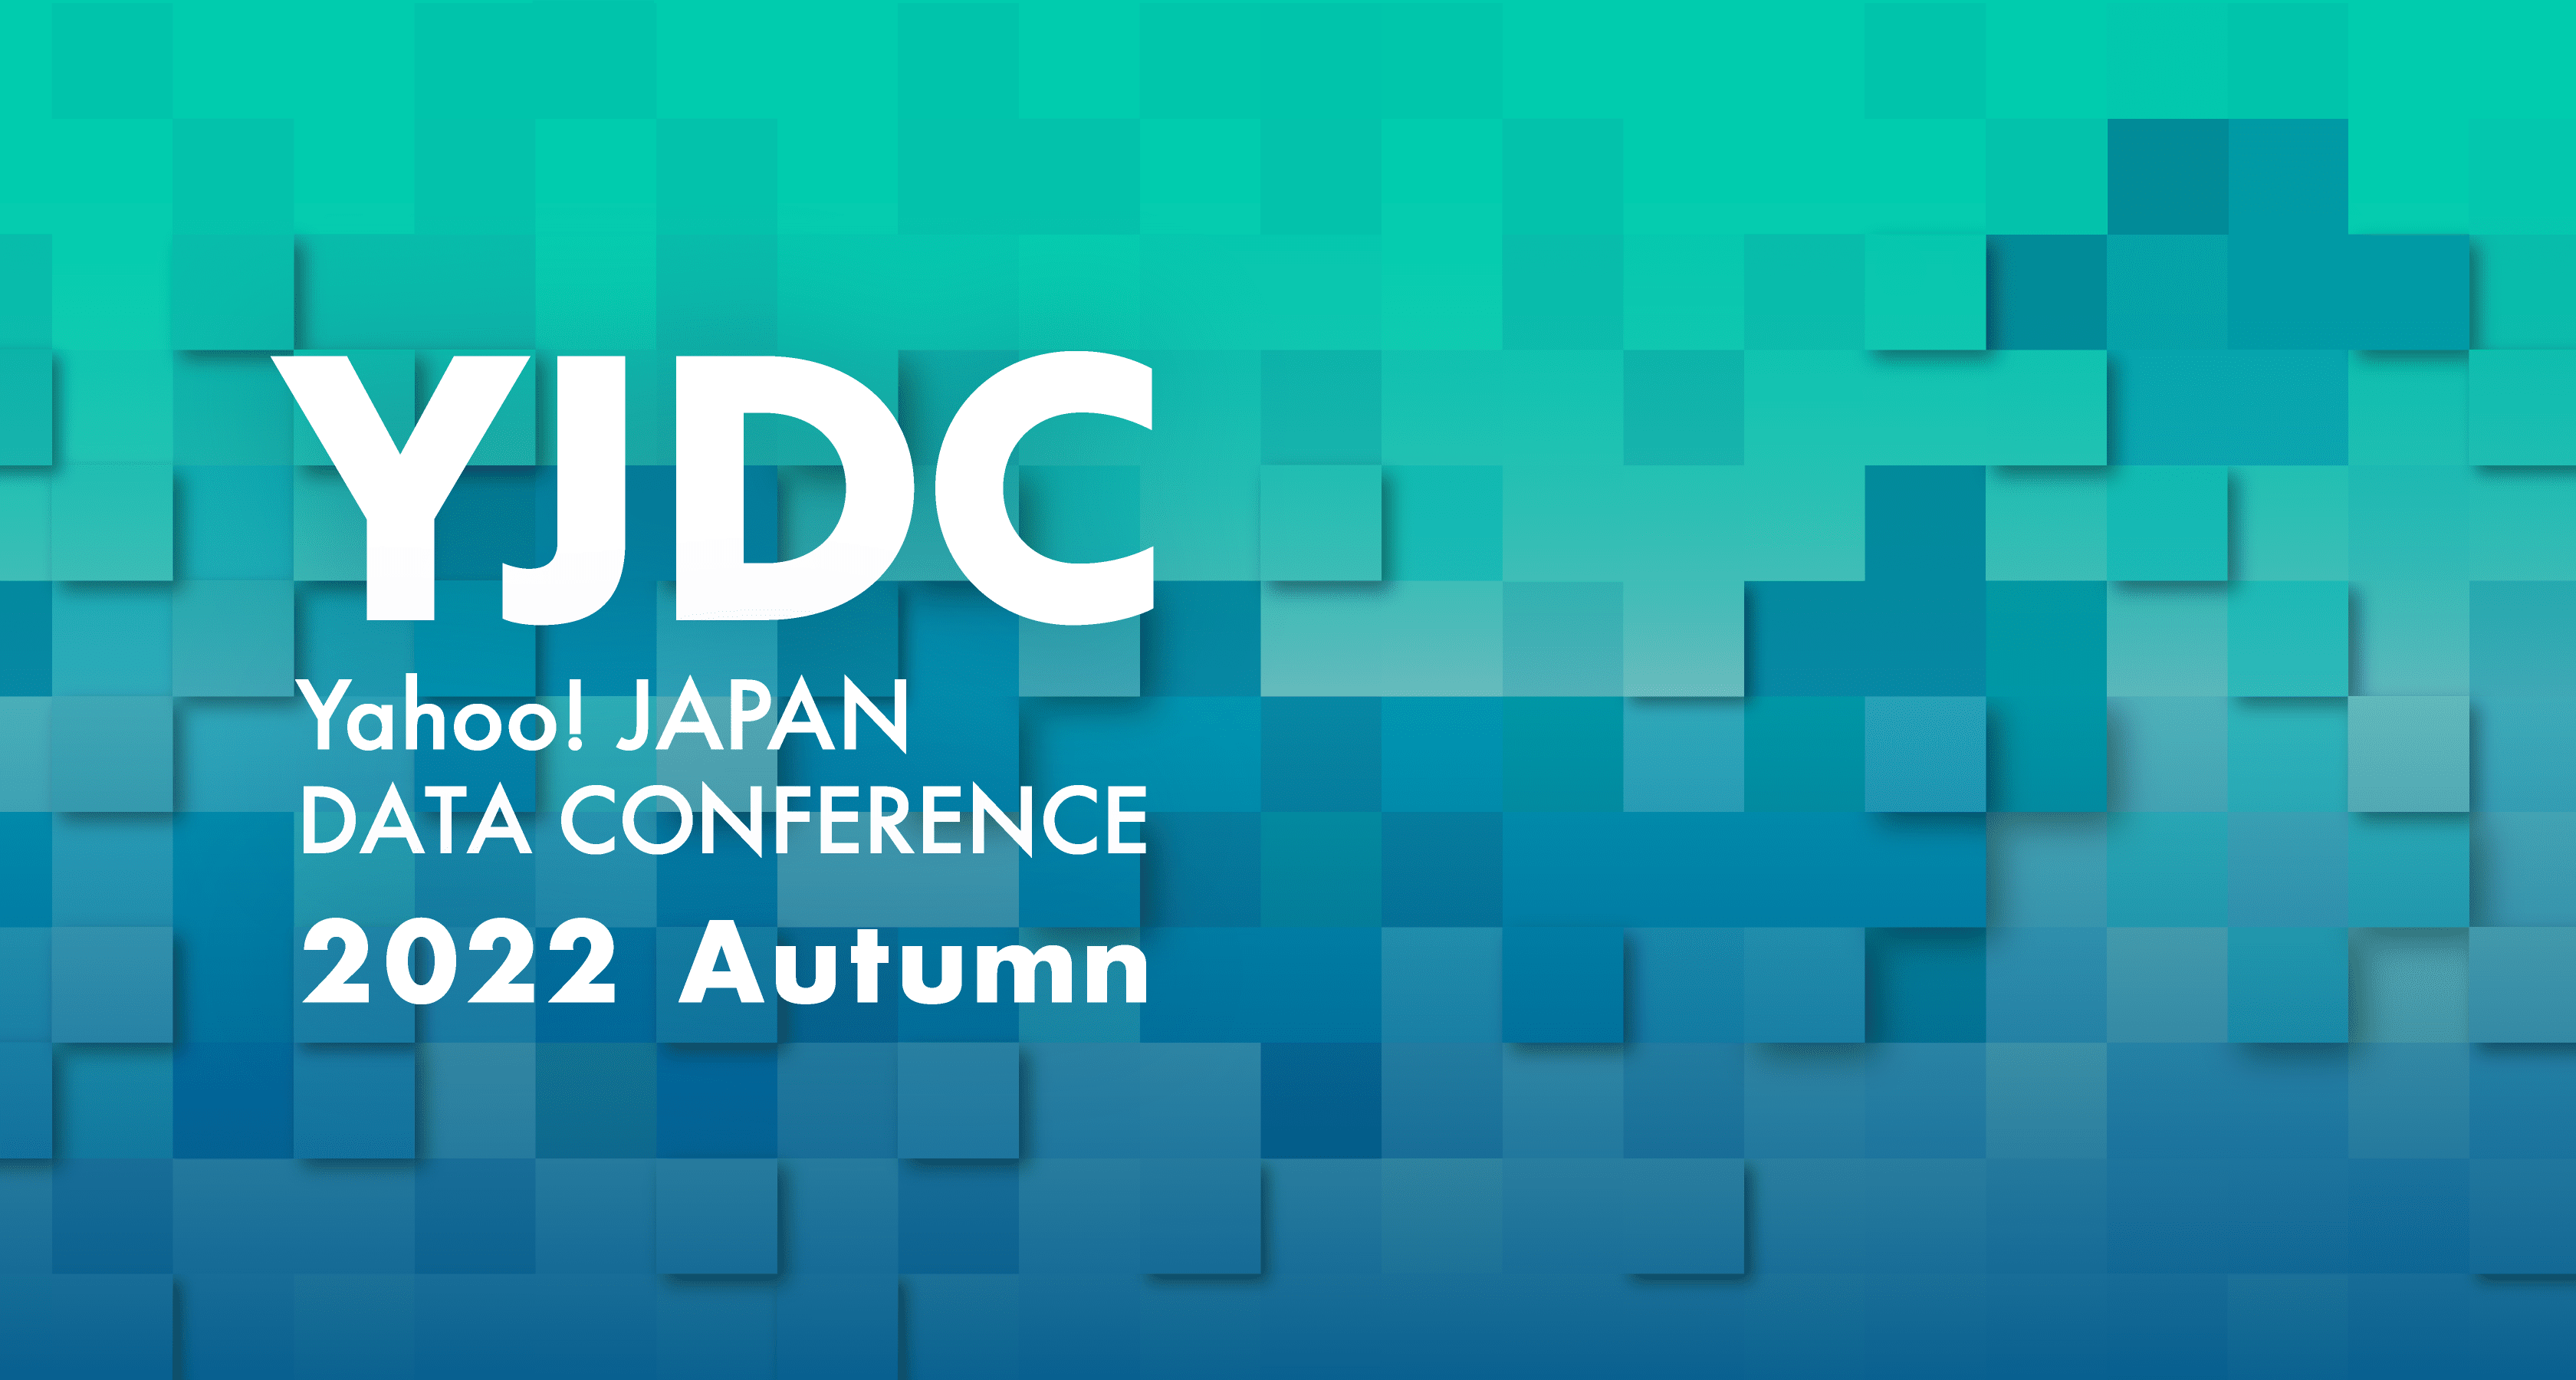 YJDC Yahoo!JAPAN DATA CONFERENCE 2022 Autumn